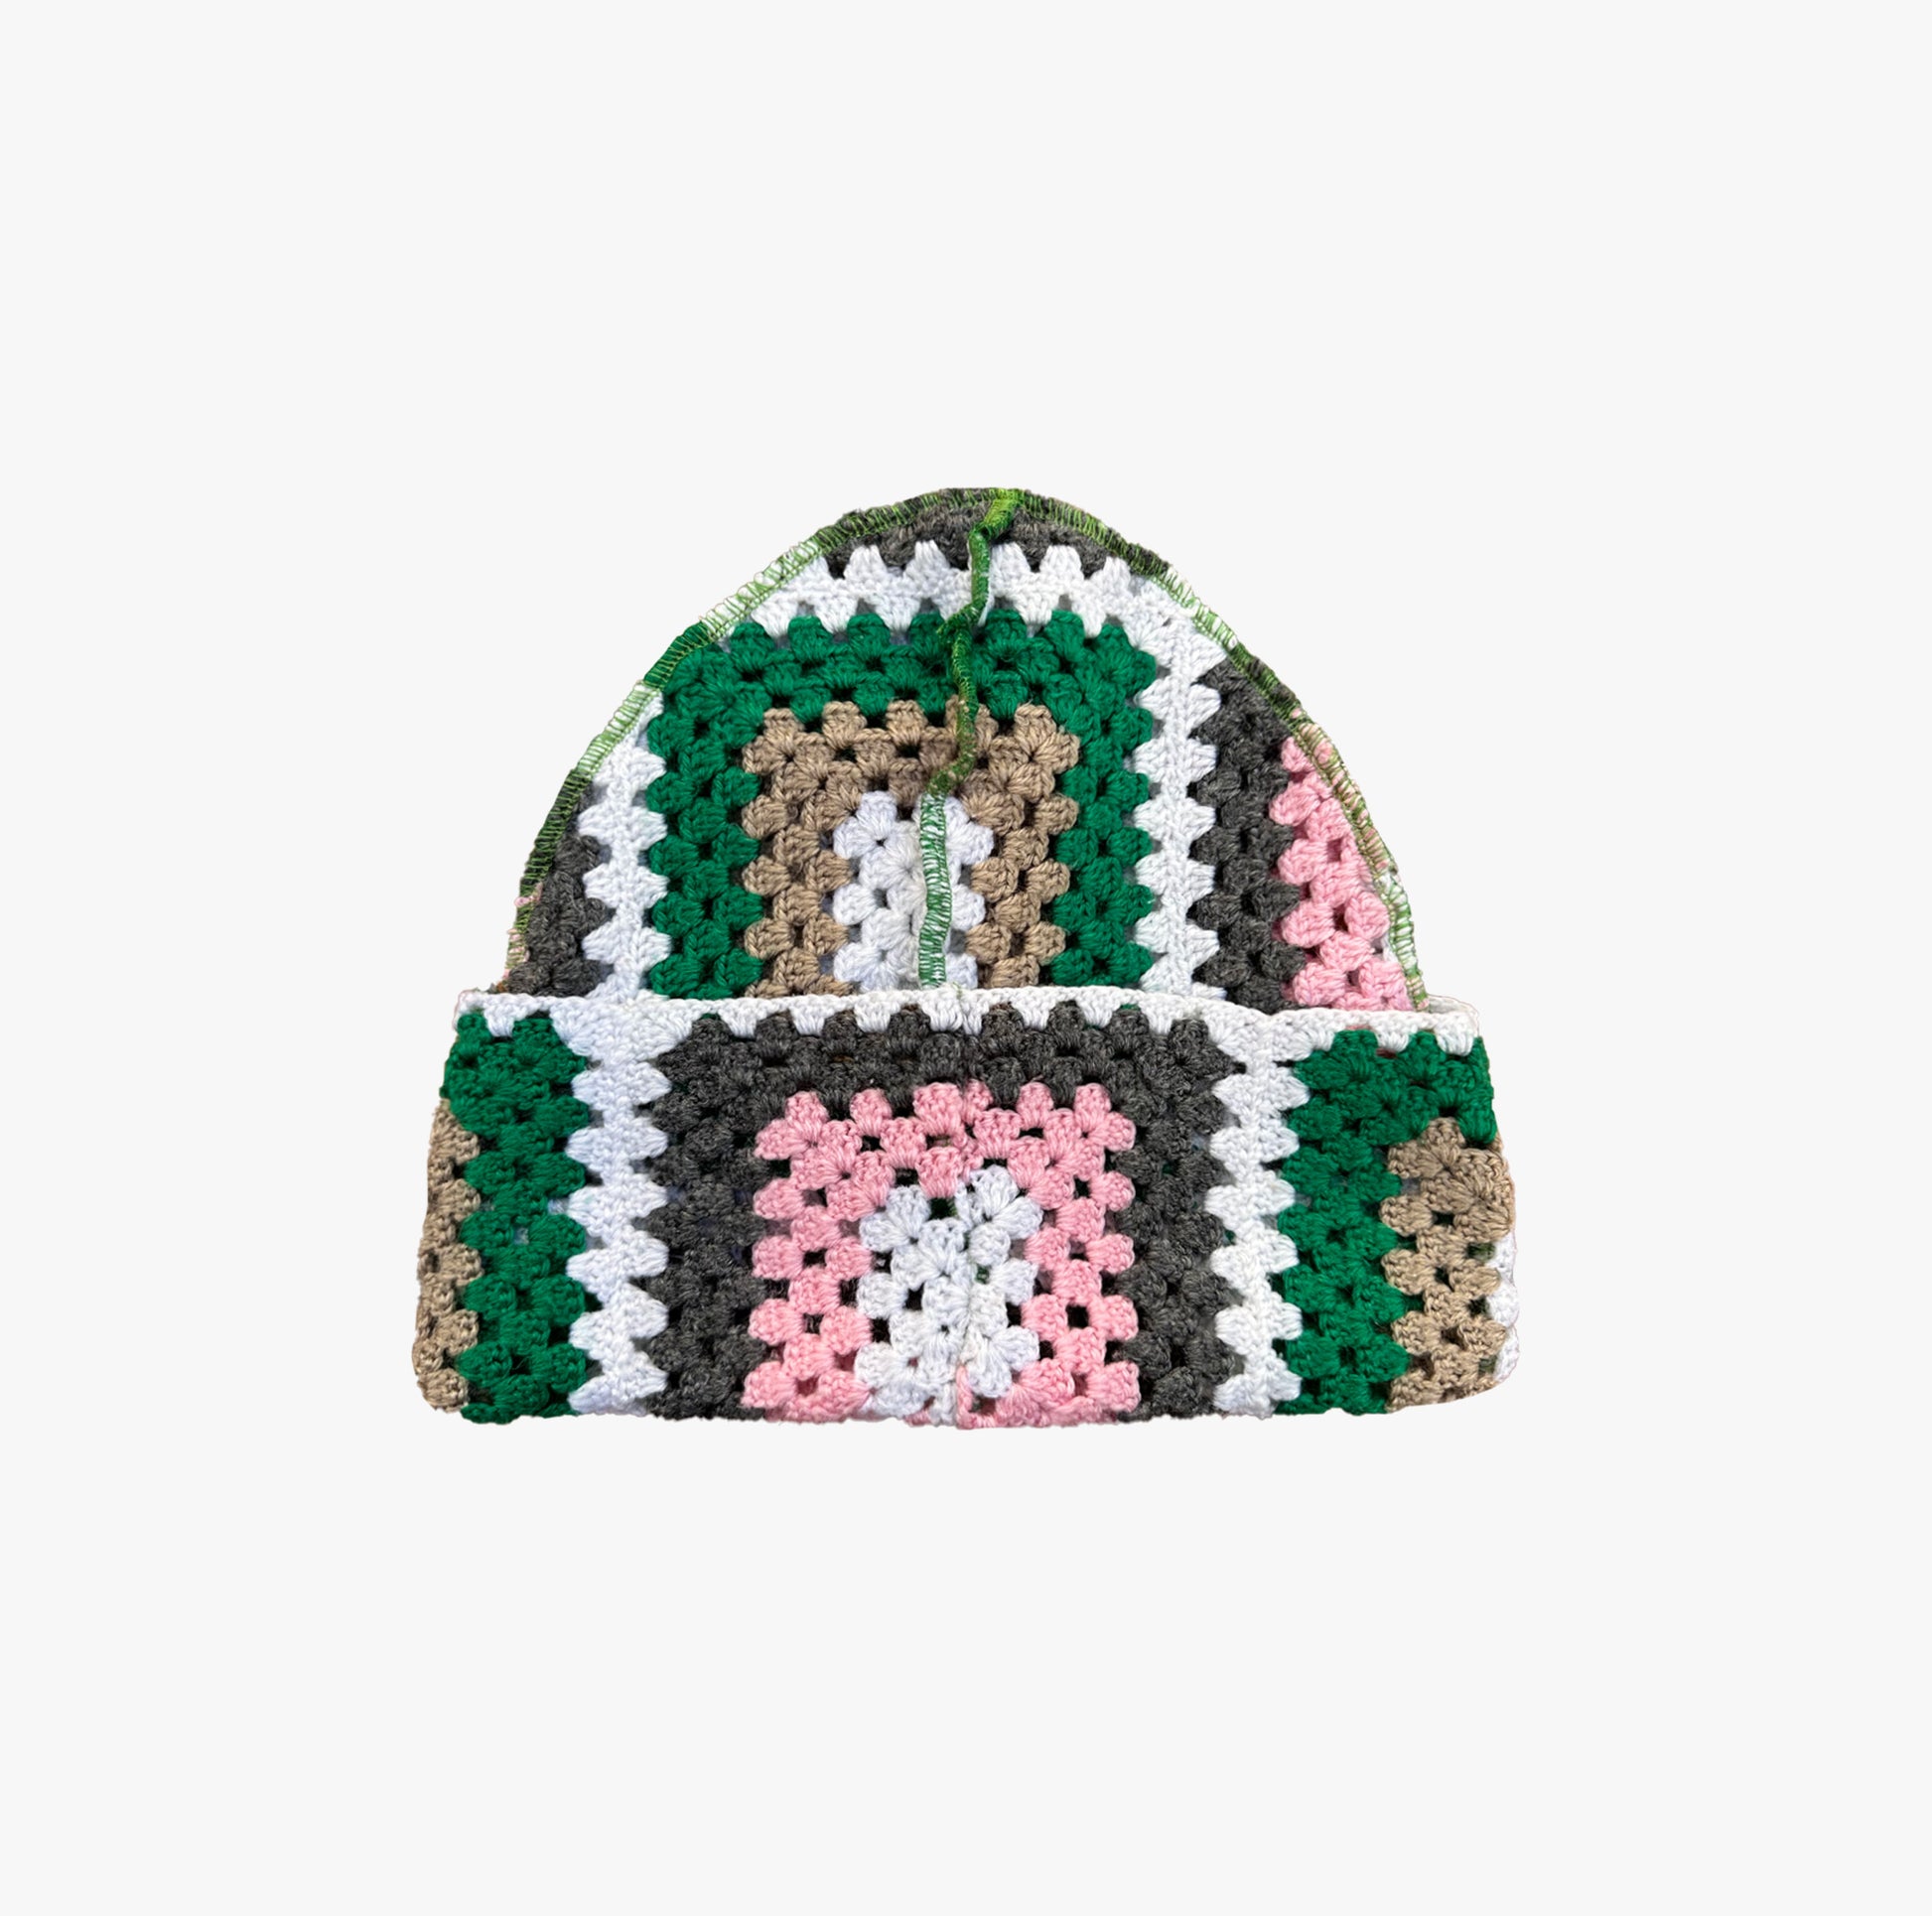 Handmade crochet overlocked beanie hat